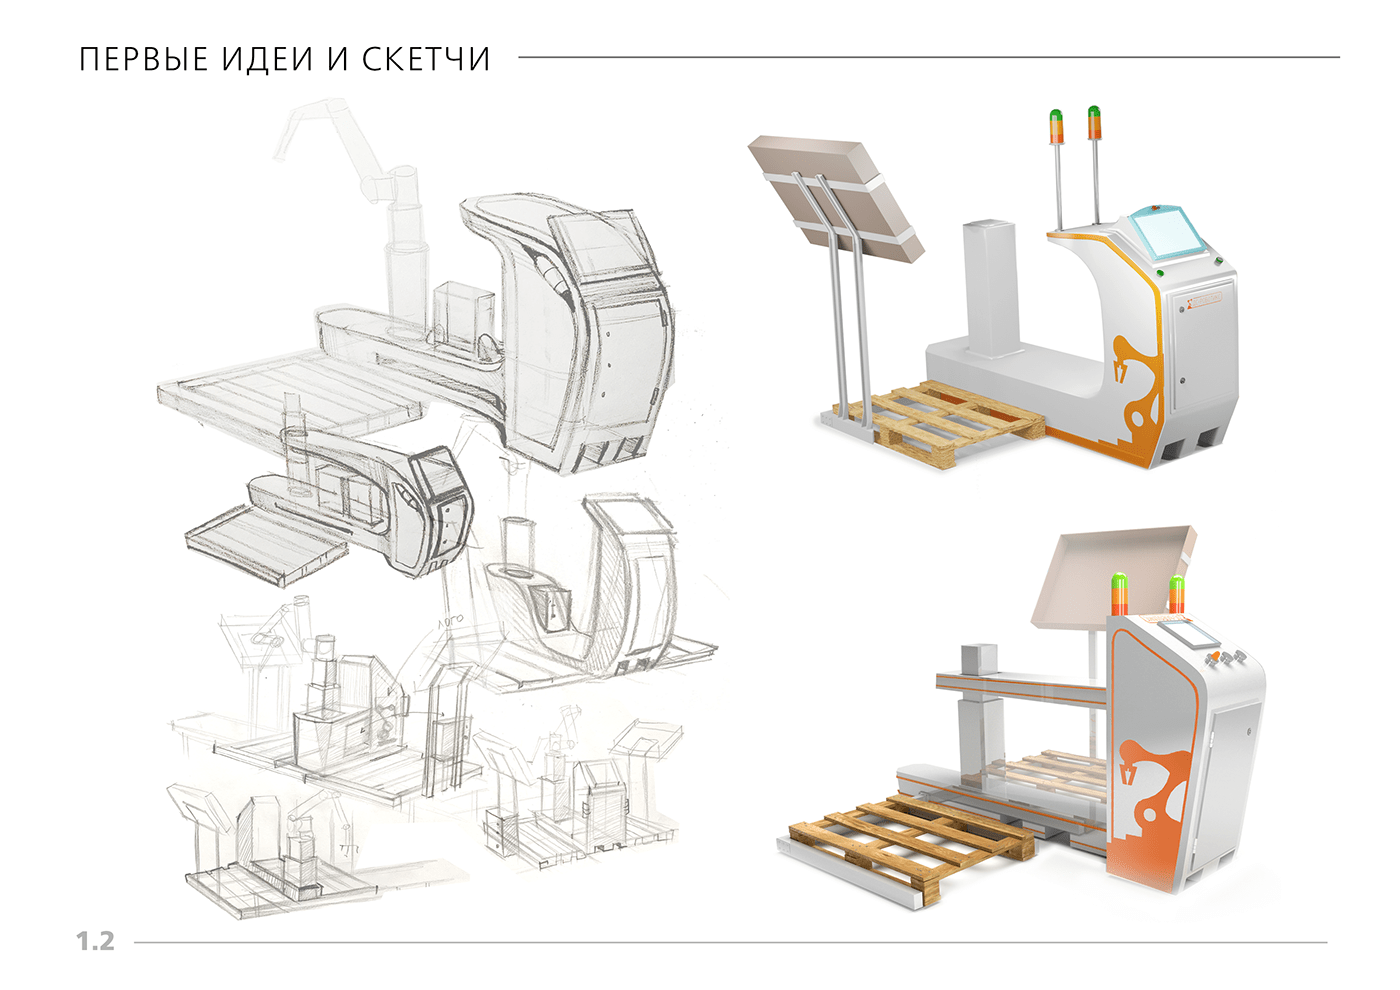 3D design industrial design  portfolio product product design  Render visualization портфолио промышленный дизайн